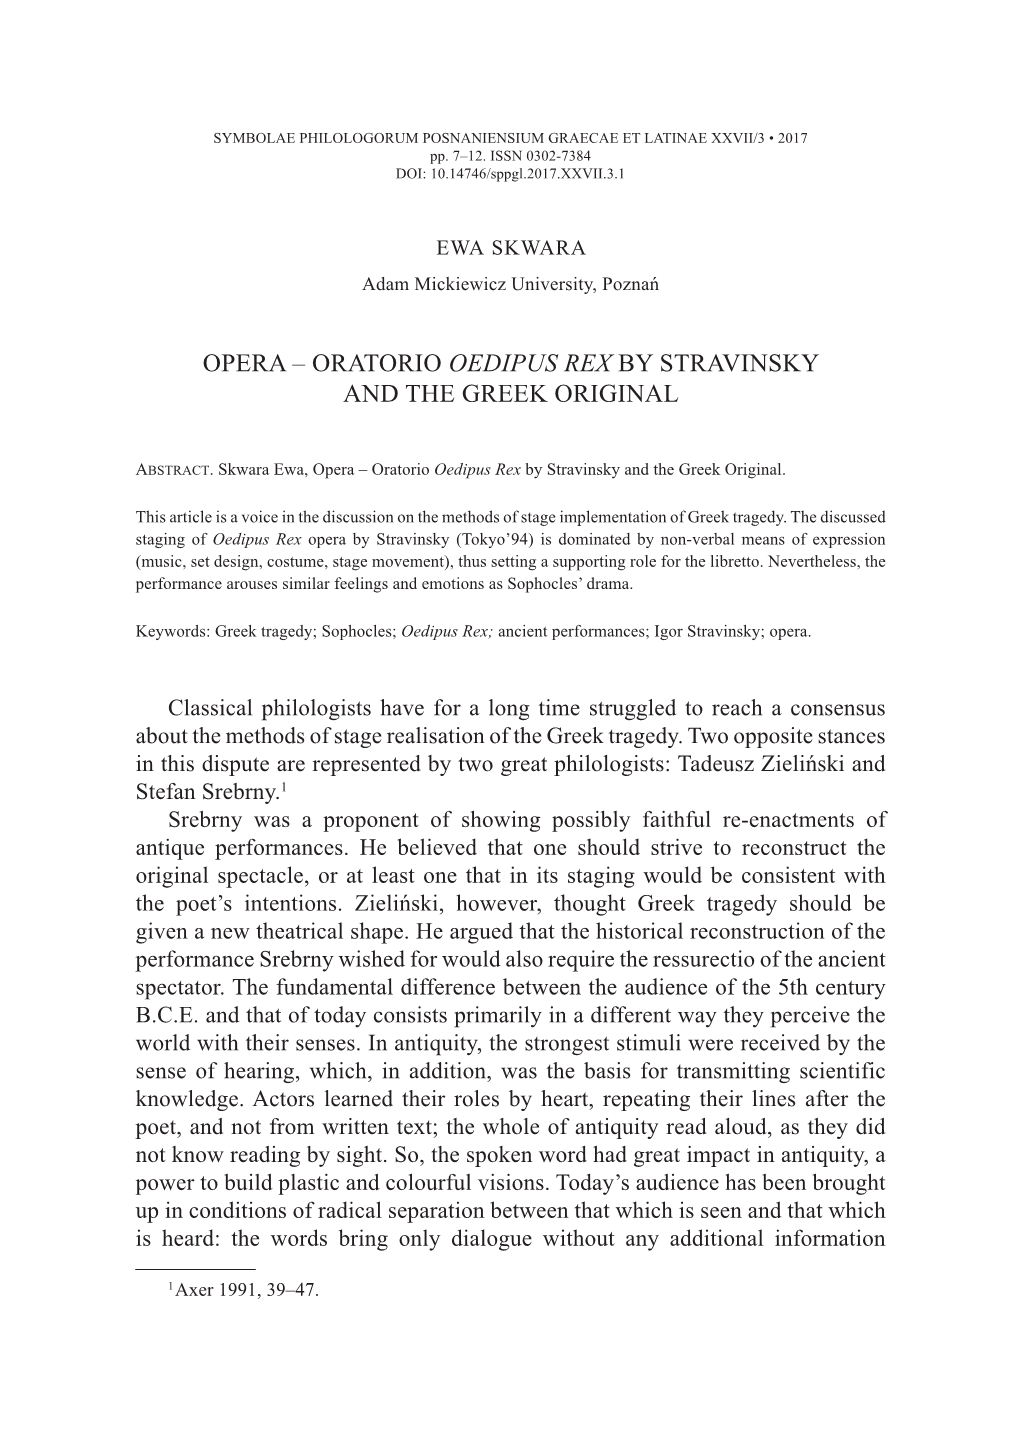 Opera – Oratorio Oedipus Rex by Stravinsky and the Greek Original